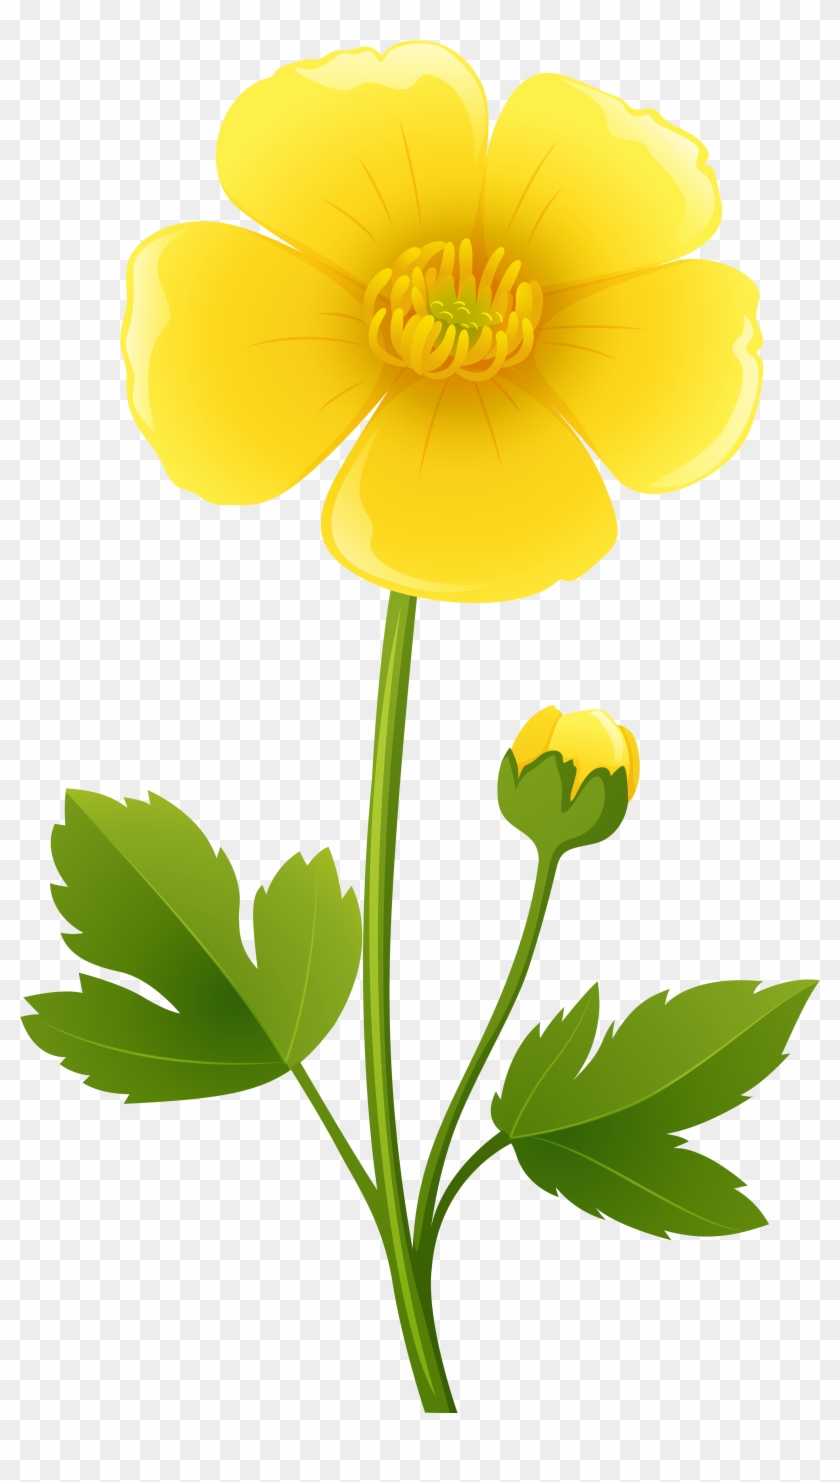 Yellow Flower Transparent Png Clip Art Image - Yellow Flower Transparent Clipart #43642